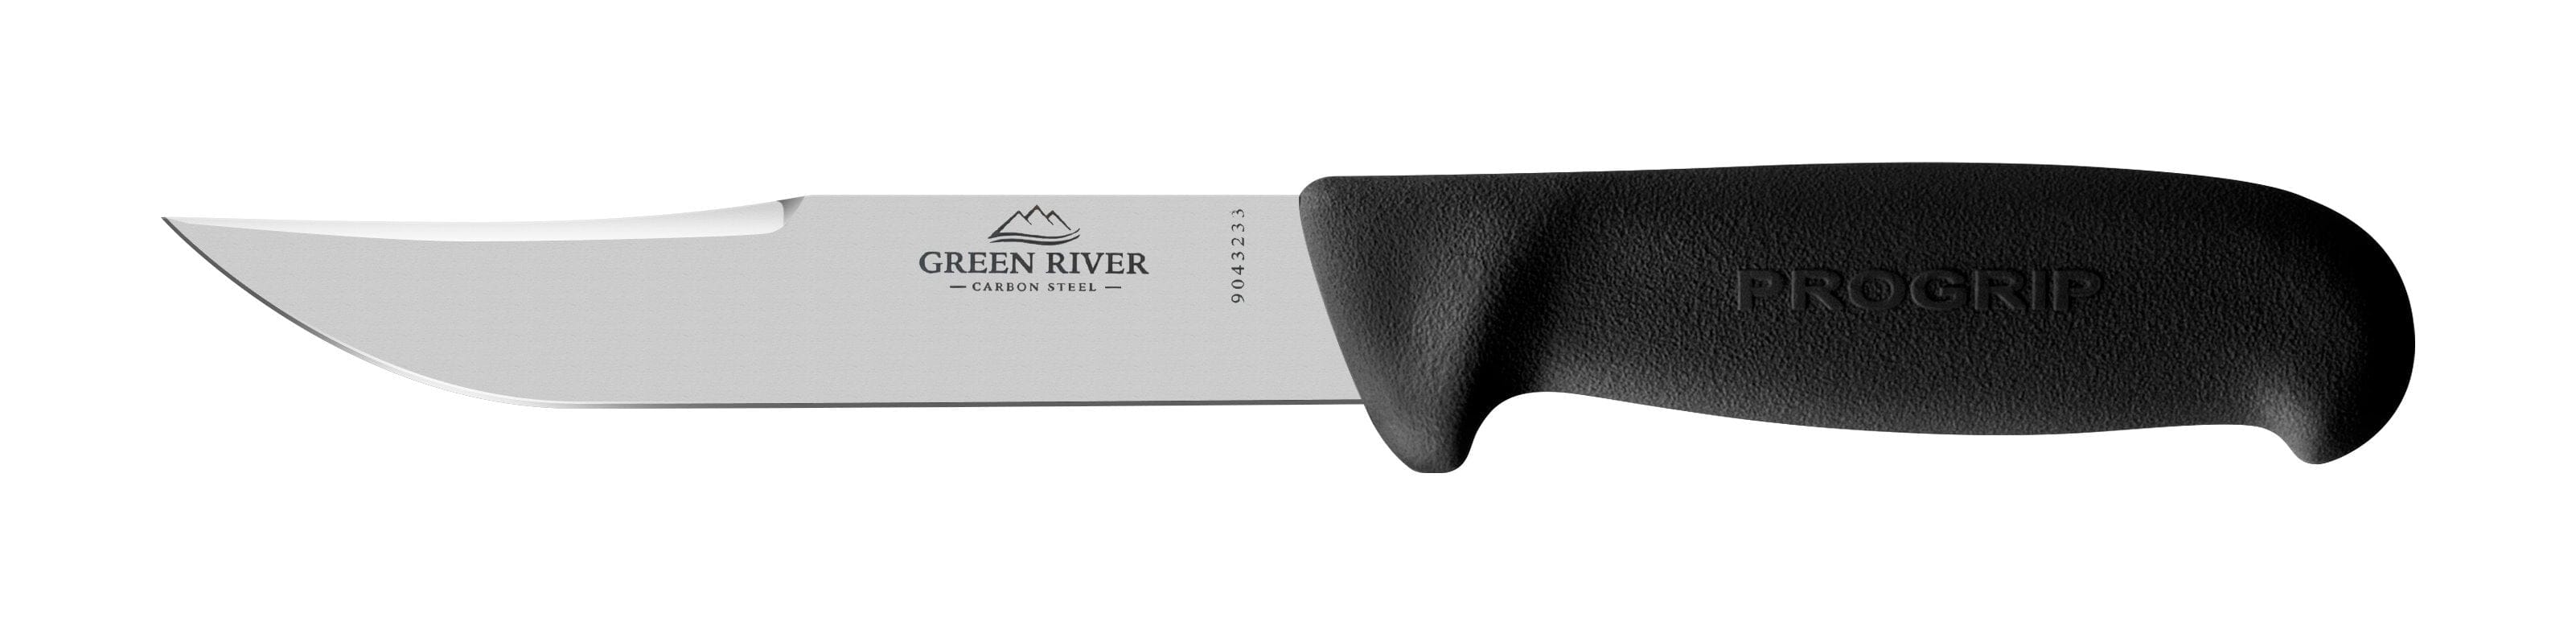 Green River Bushmans Friend - Outdoors Knife 15cm #302